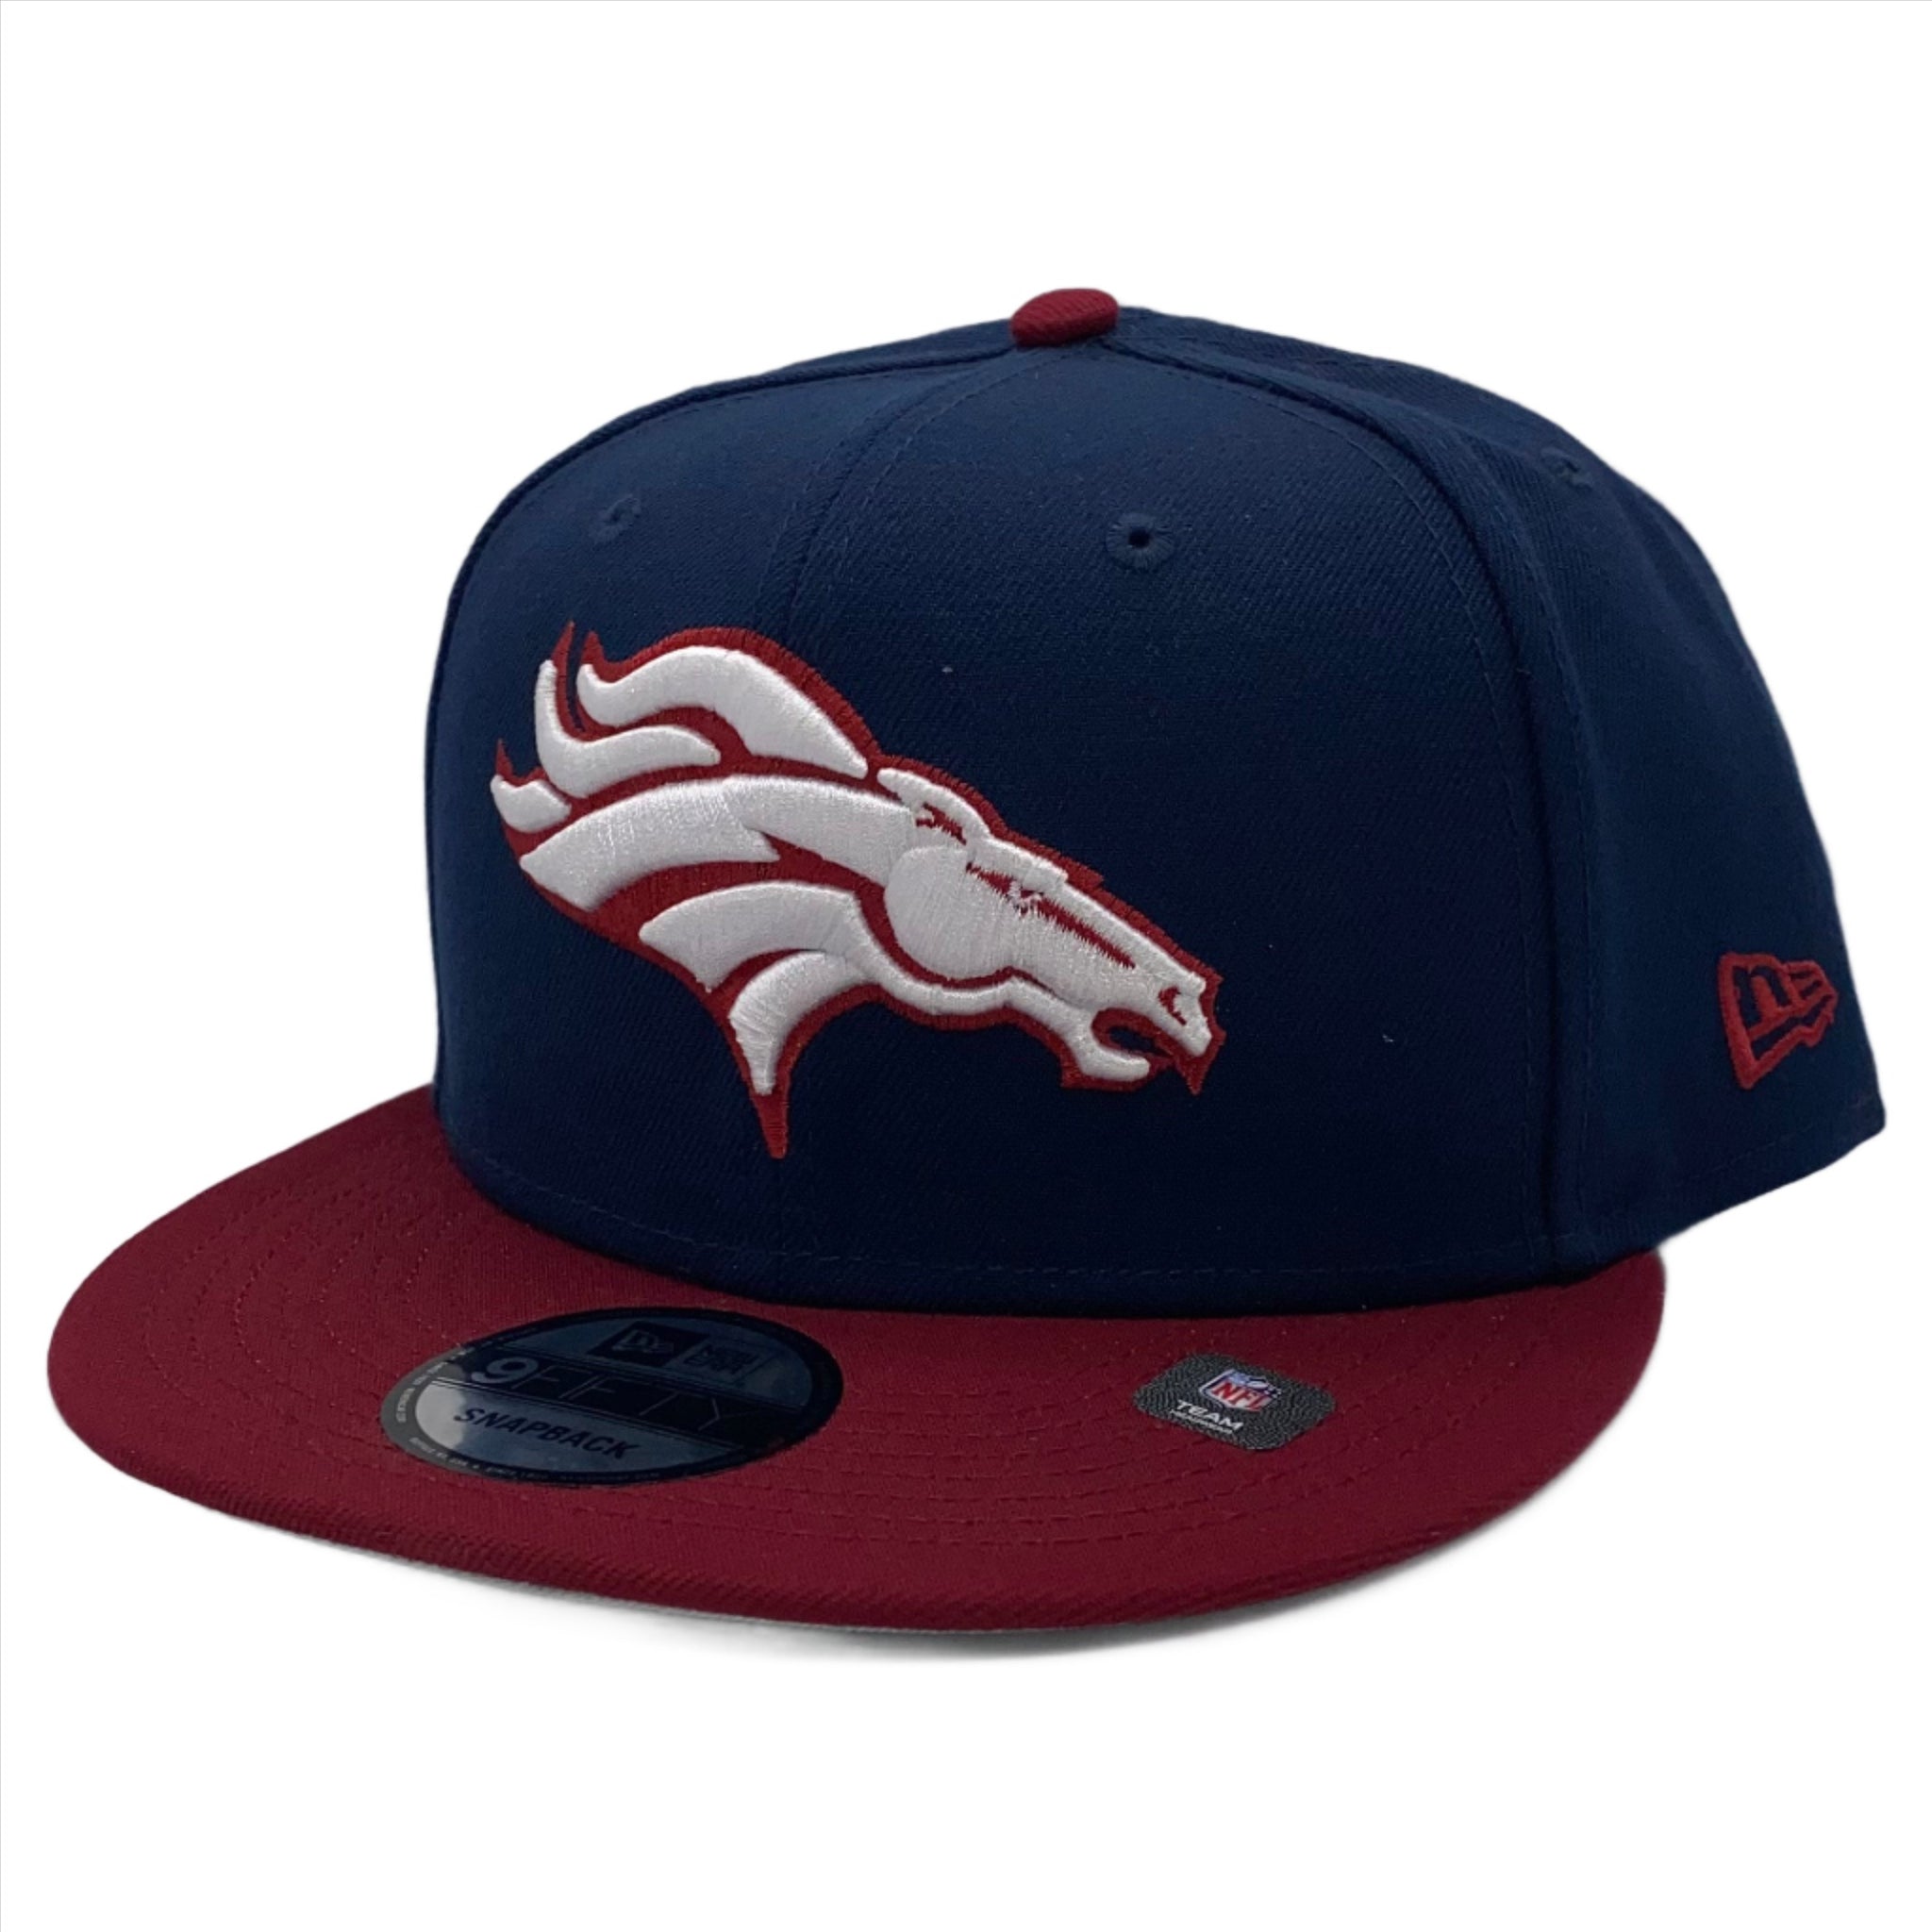 Denver Broncos New Era 2Tone Color Pack 9FIFTY Snapback Hat - Navy/Cardinals